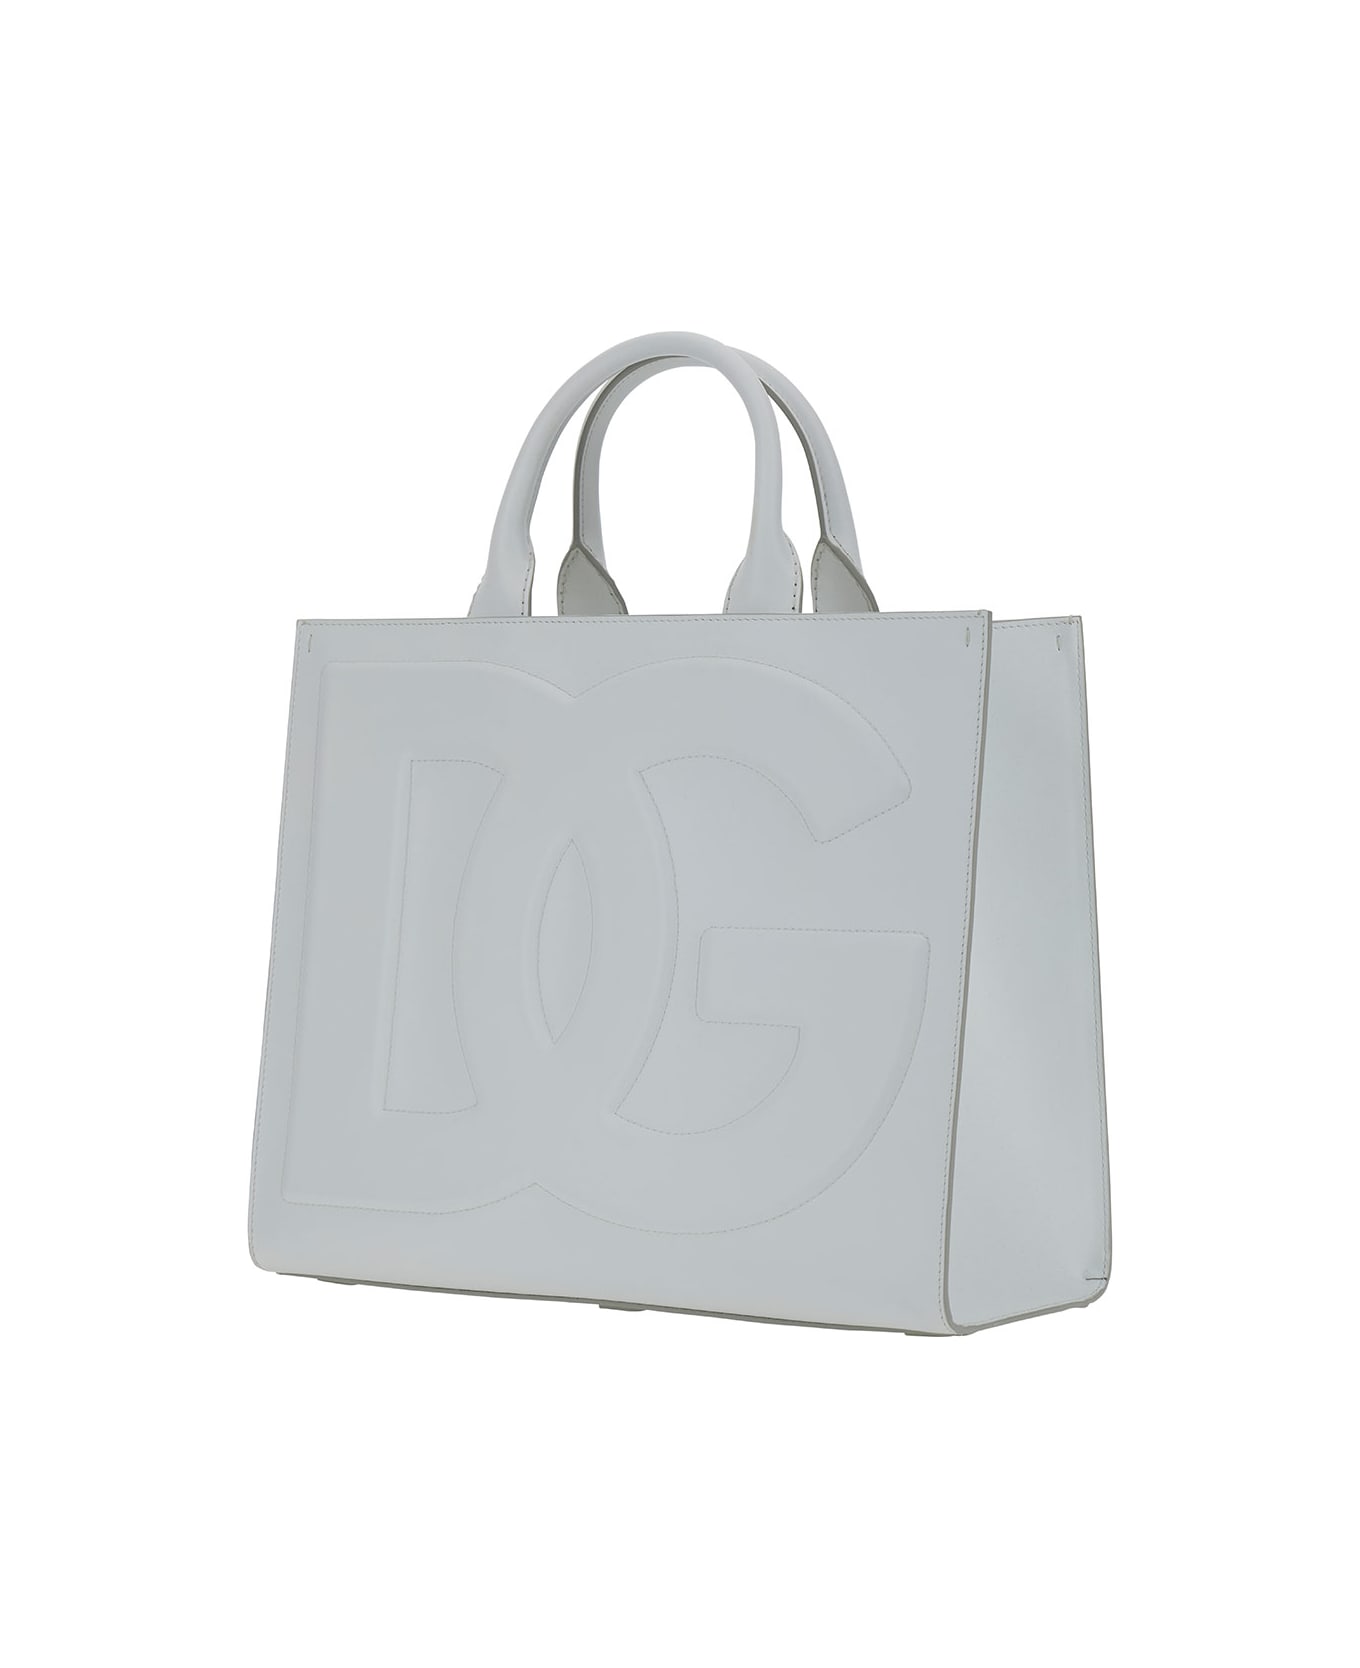 Dolce & Gabbana White Handbag With Tonal Dg Detail In Smooth Leather Woman - Bianco Ottico